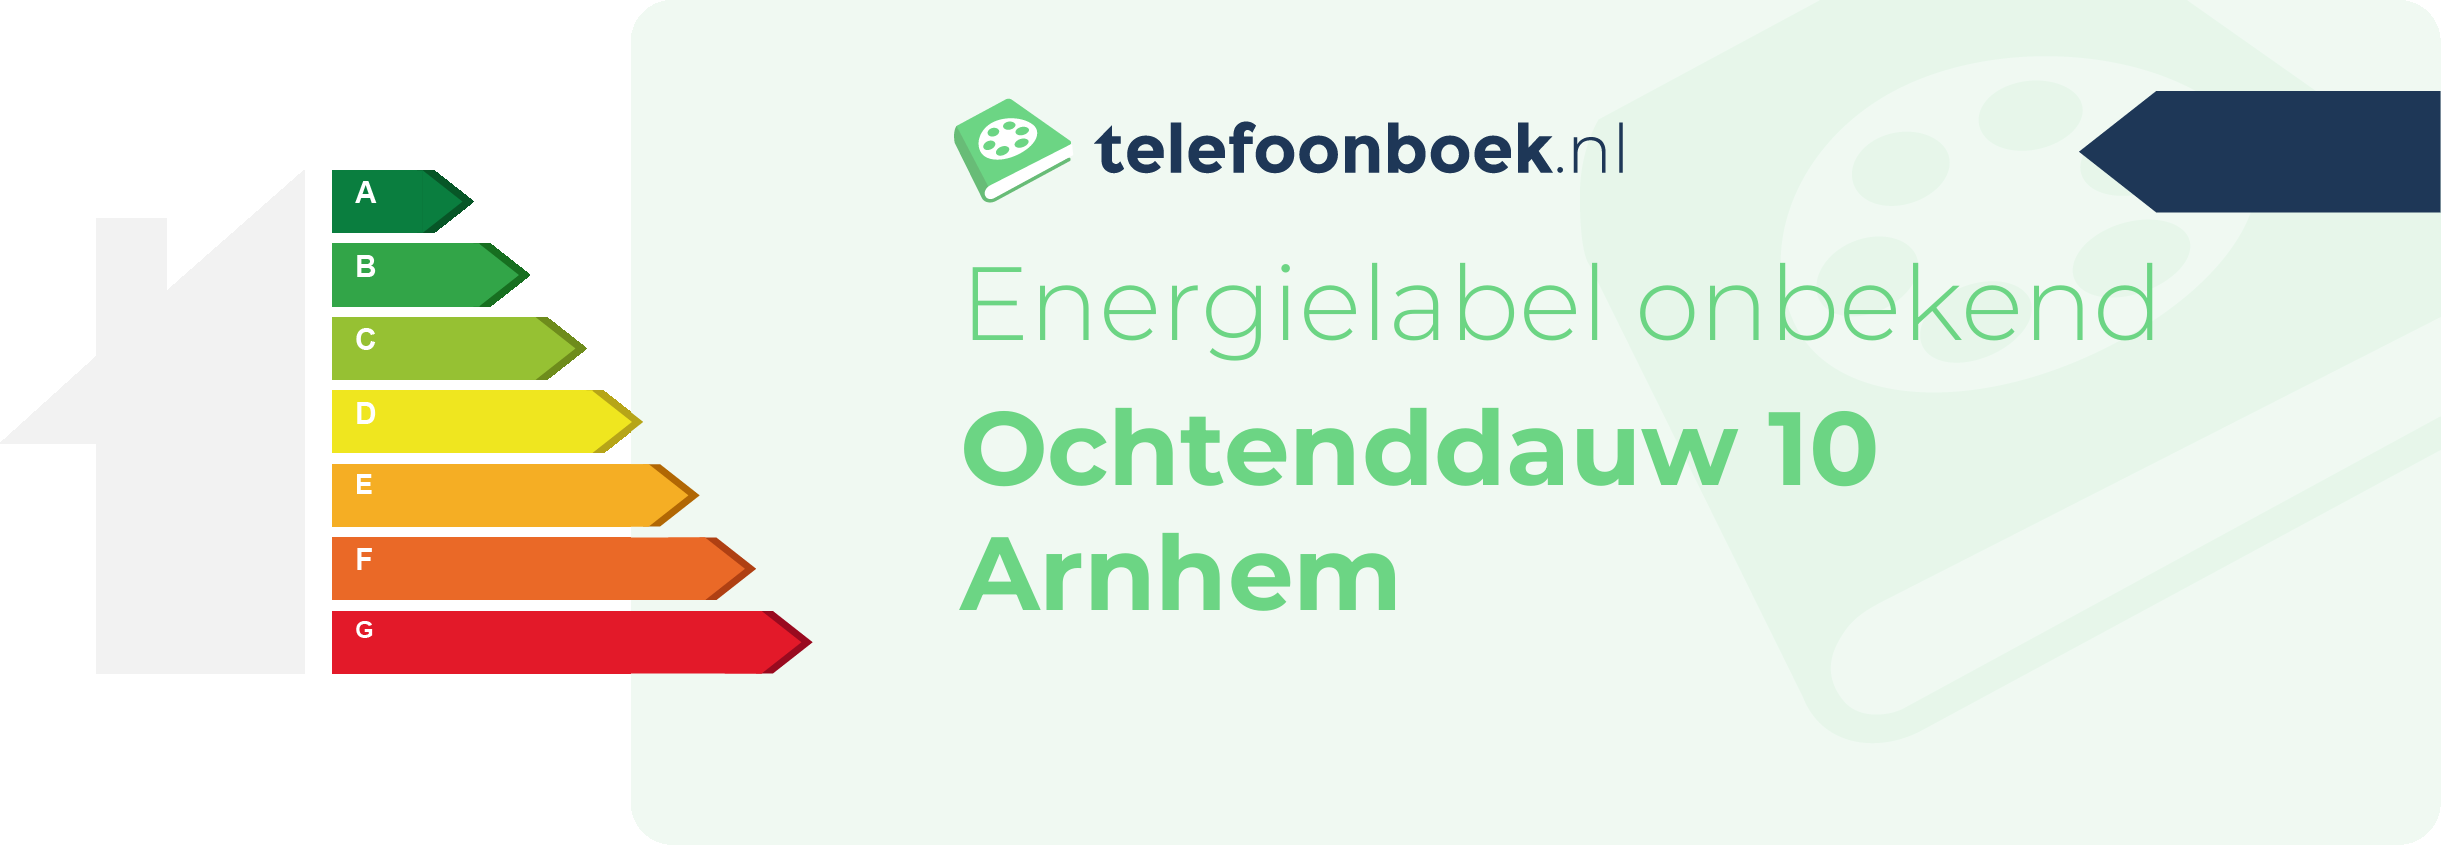 Energielabel Ochtenddauw 10 Arnhem